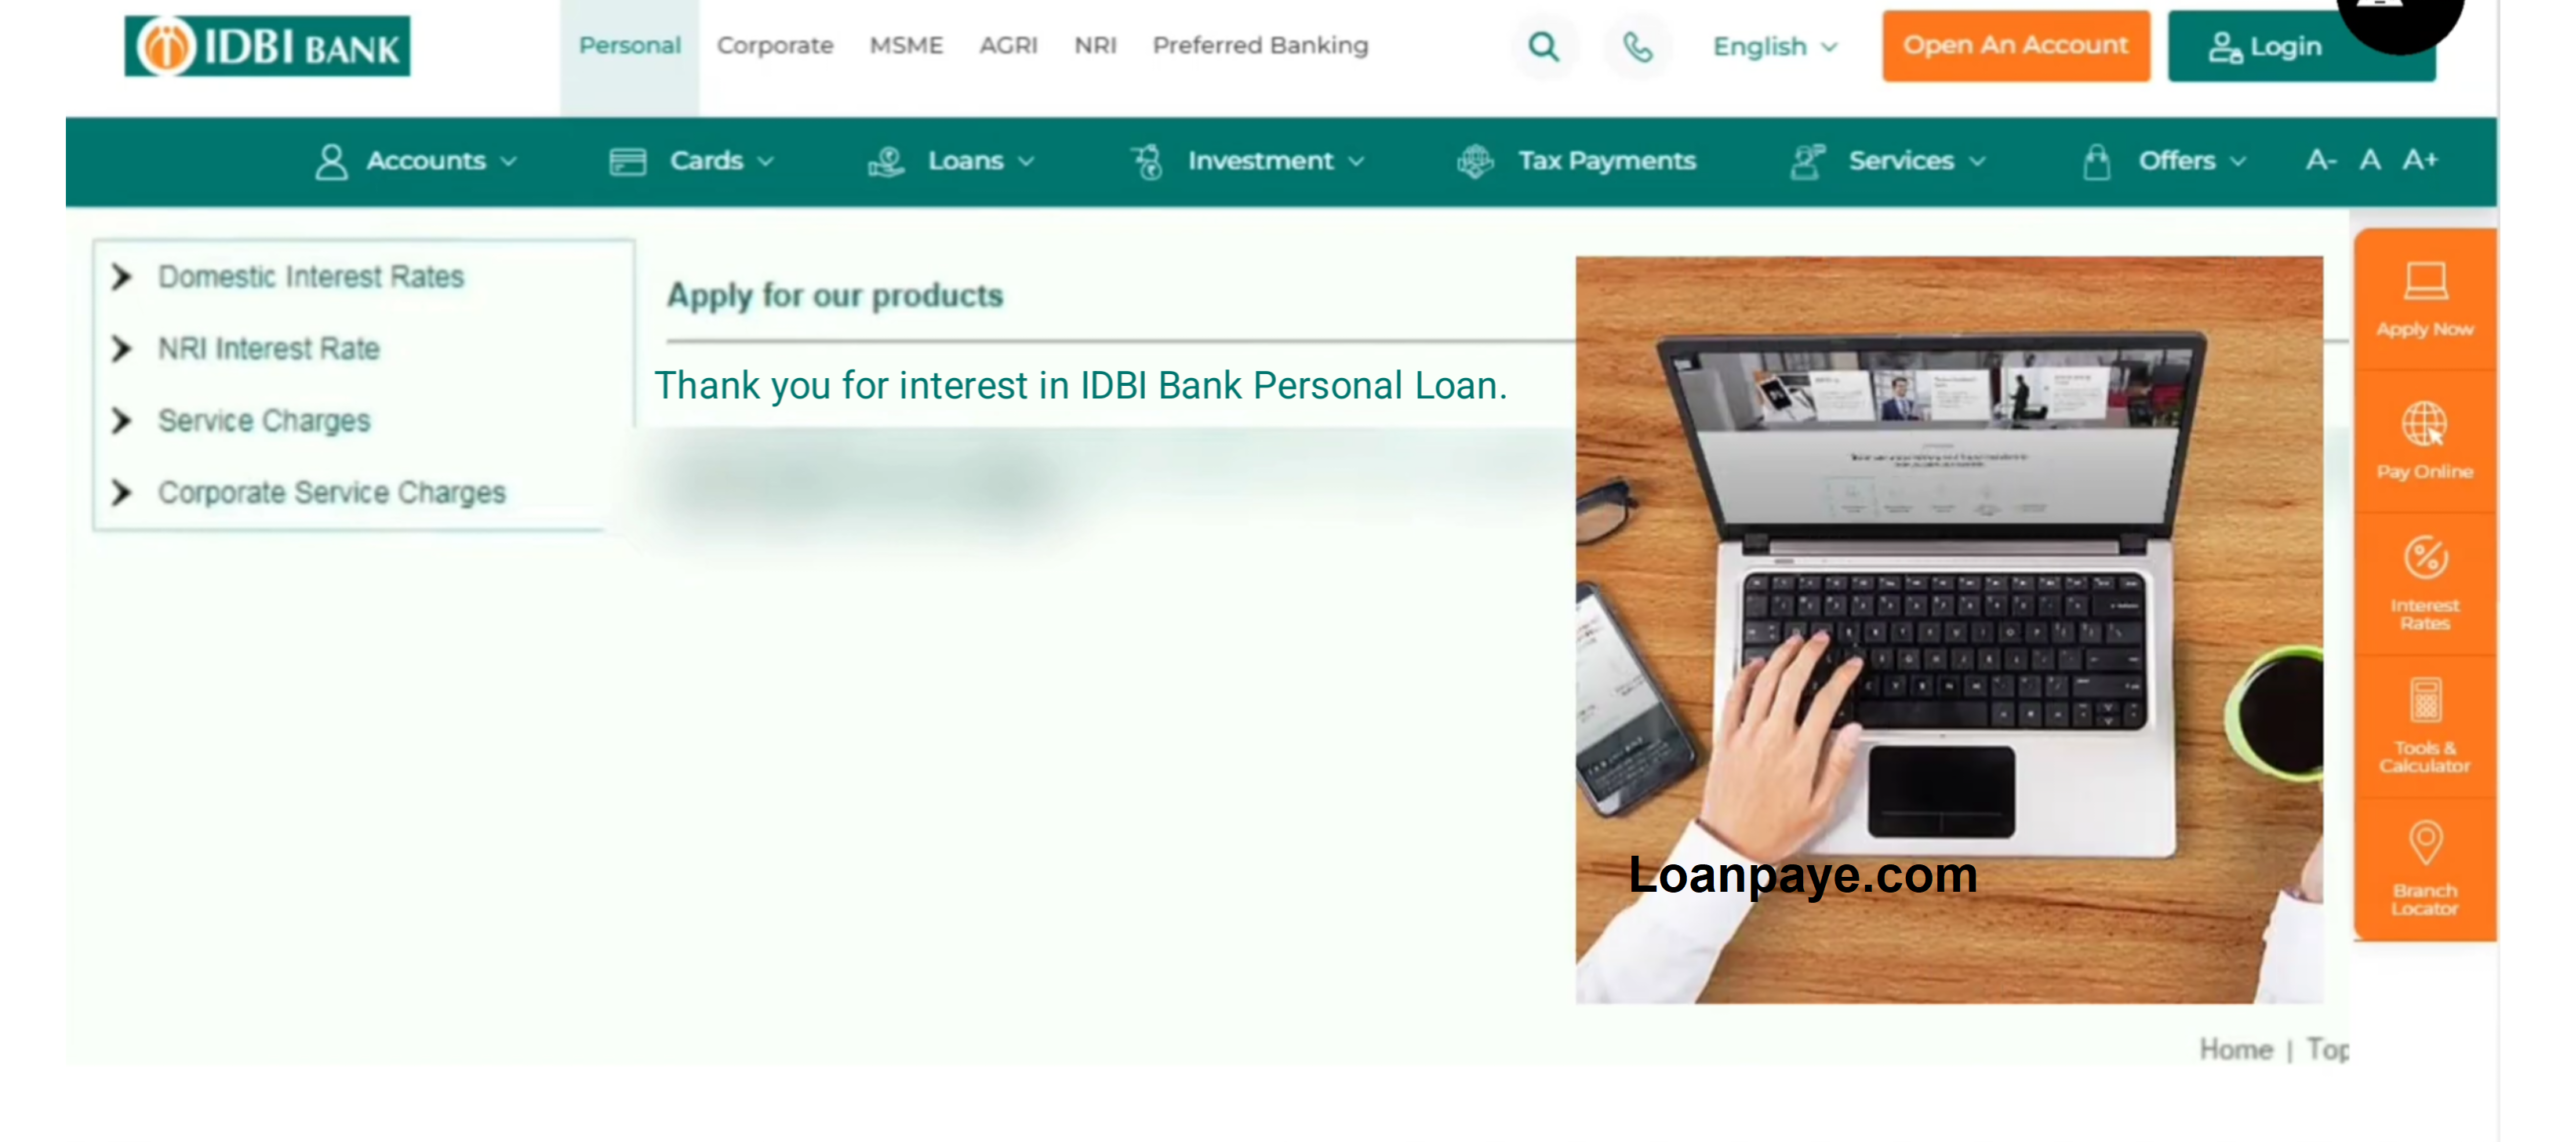 Aise milega IDIBI Bank se personal loan step by step process